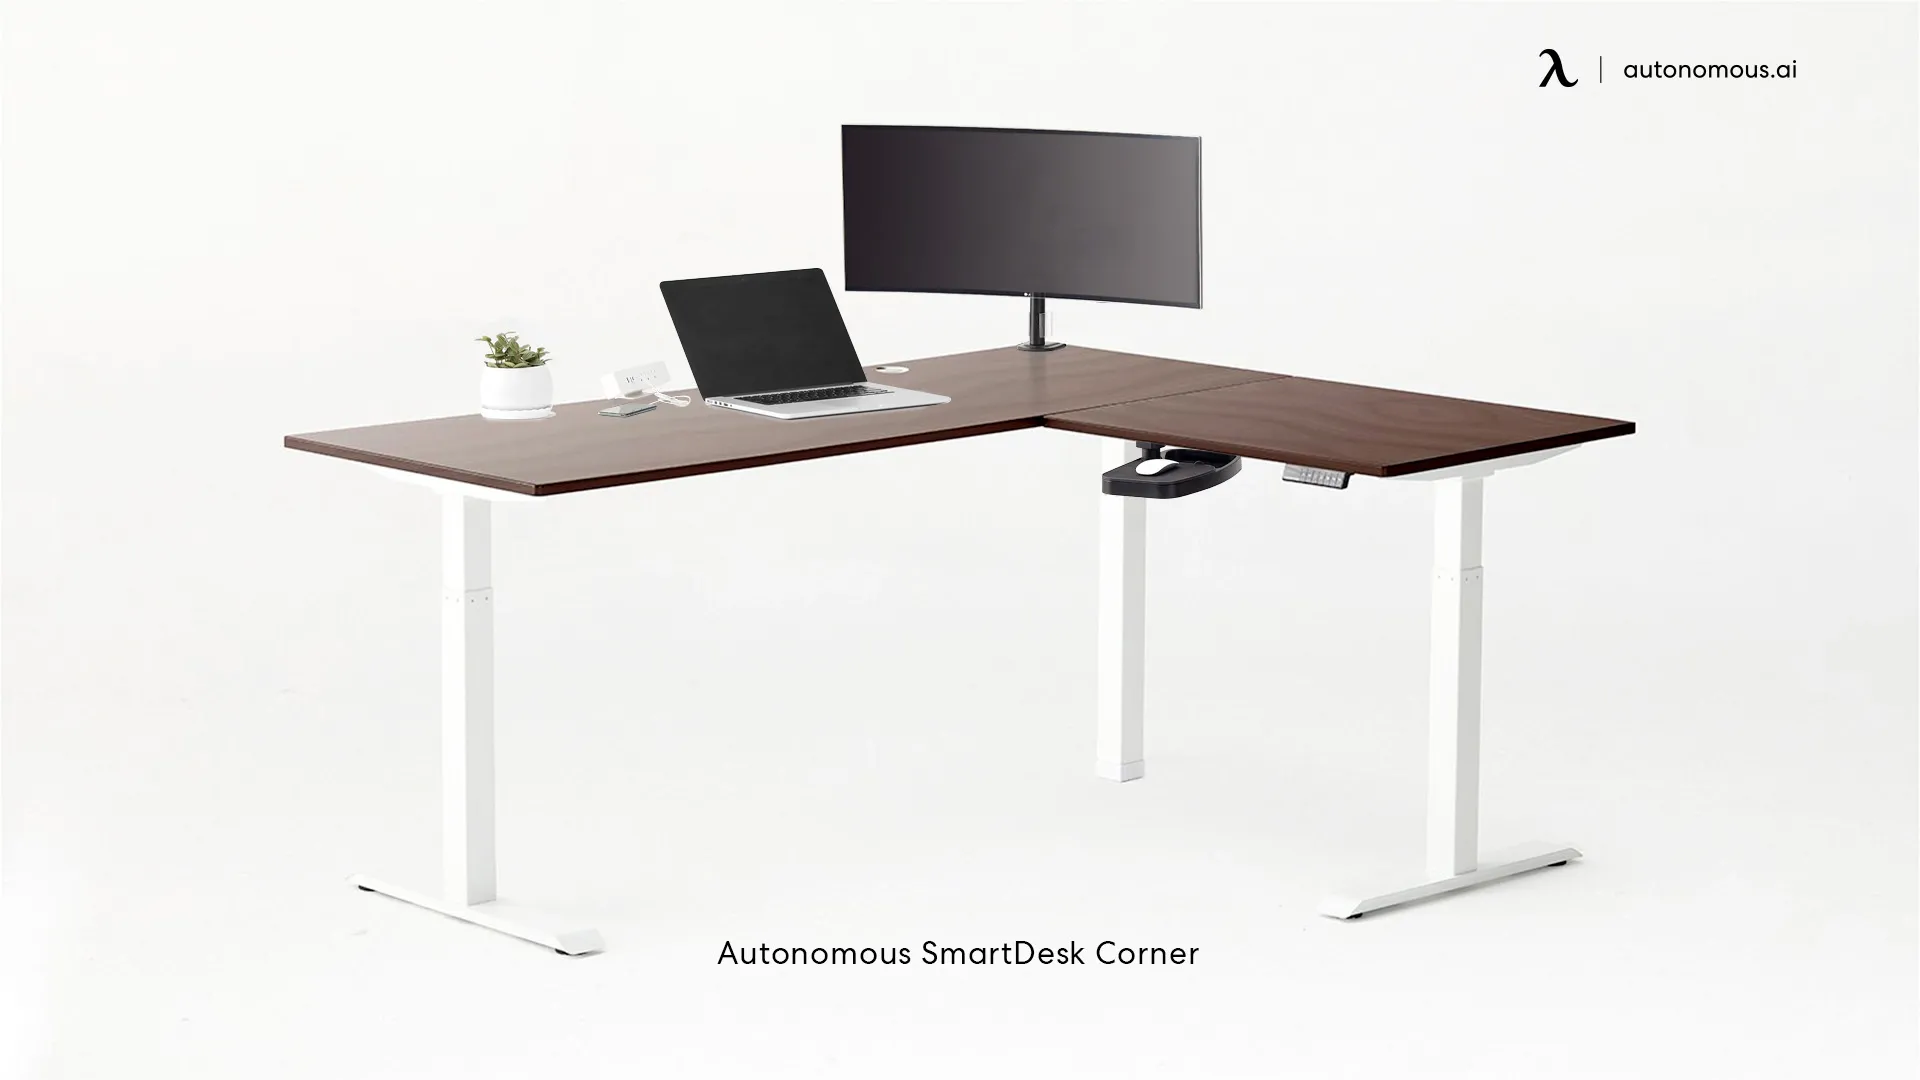 Autonomous SmartDesk Corner cool gaming desk